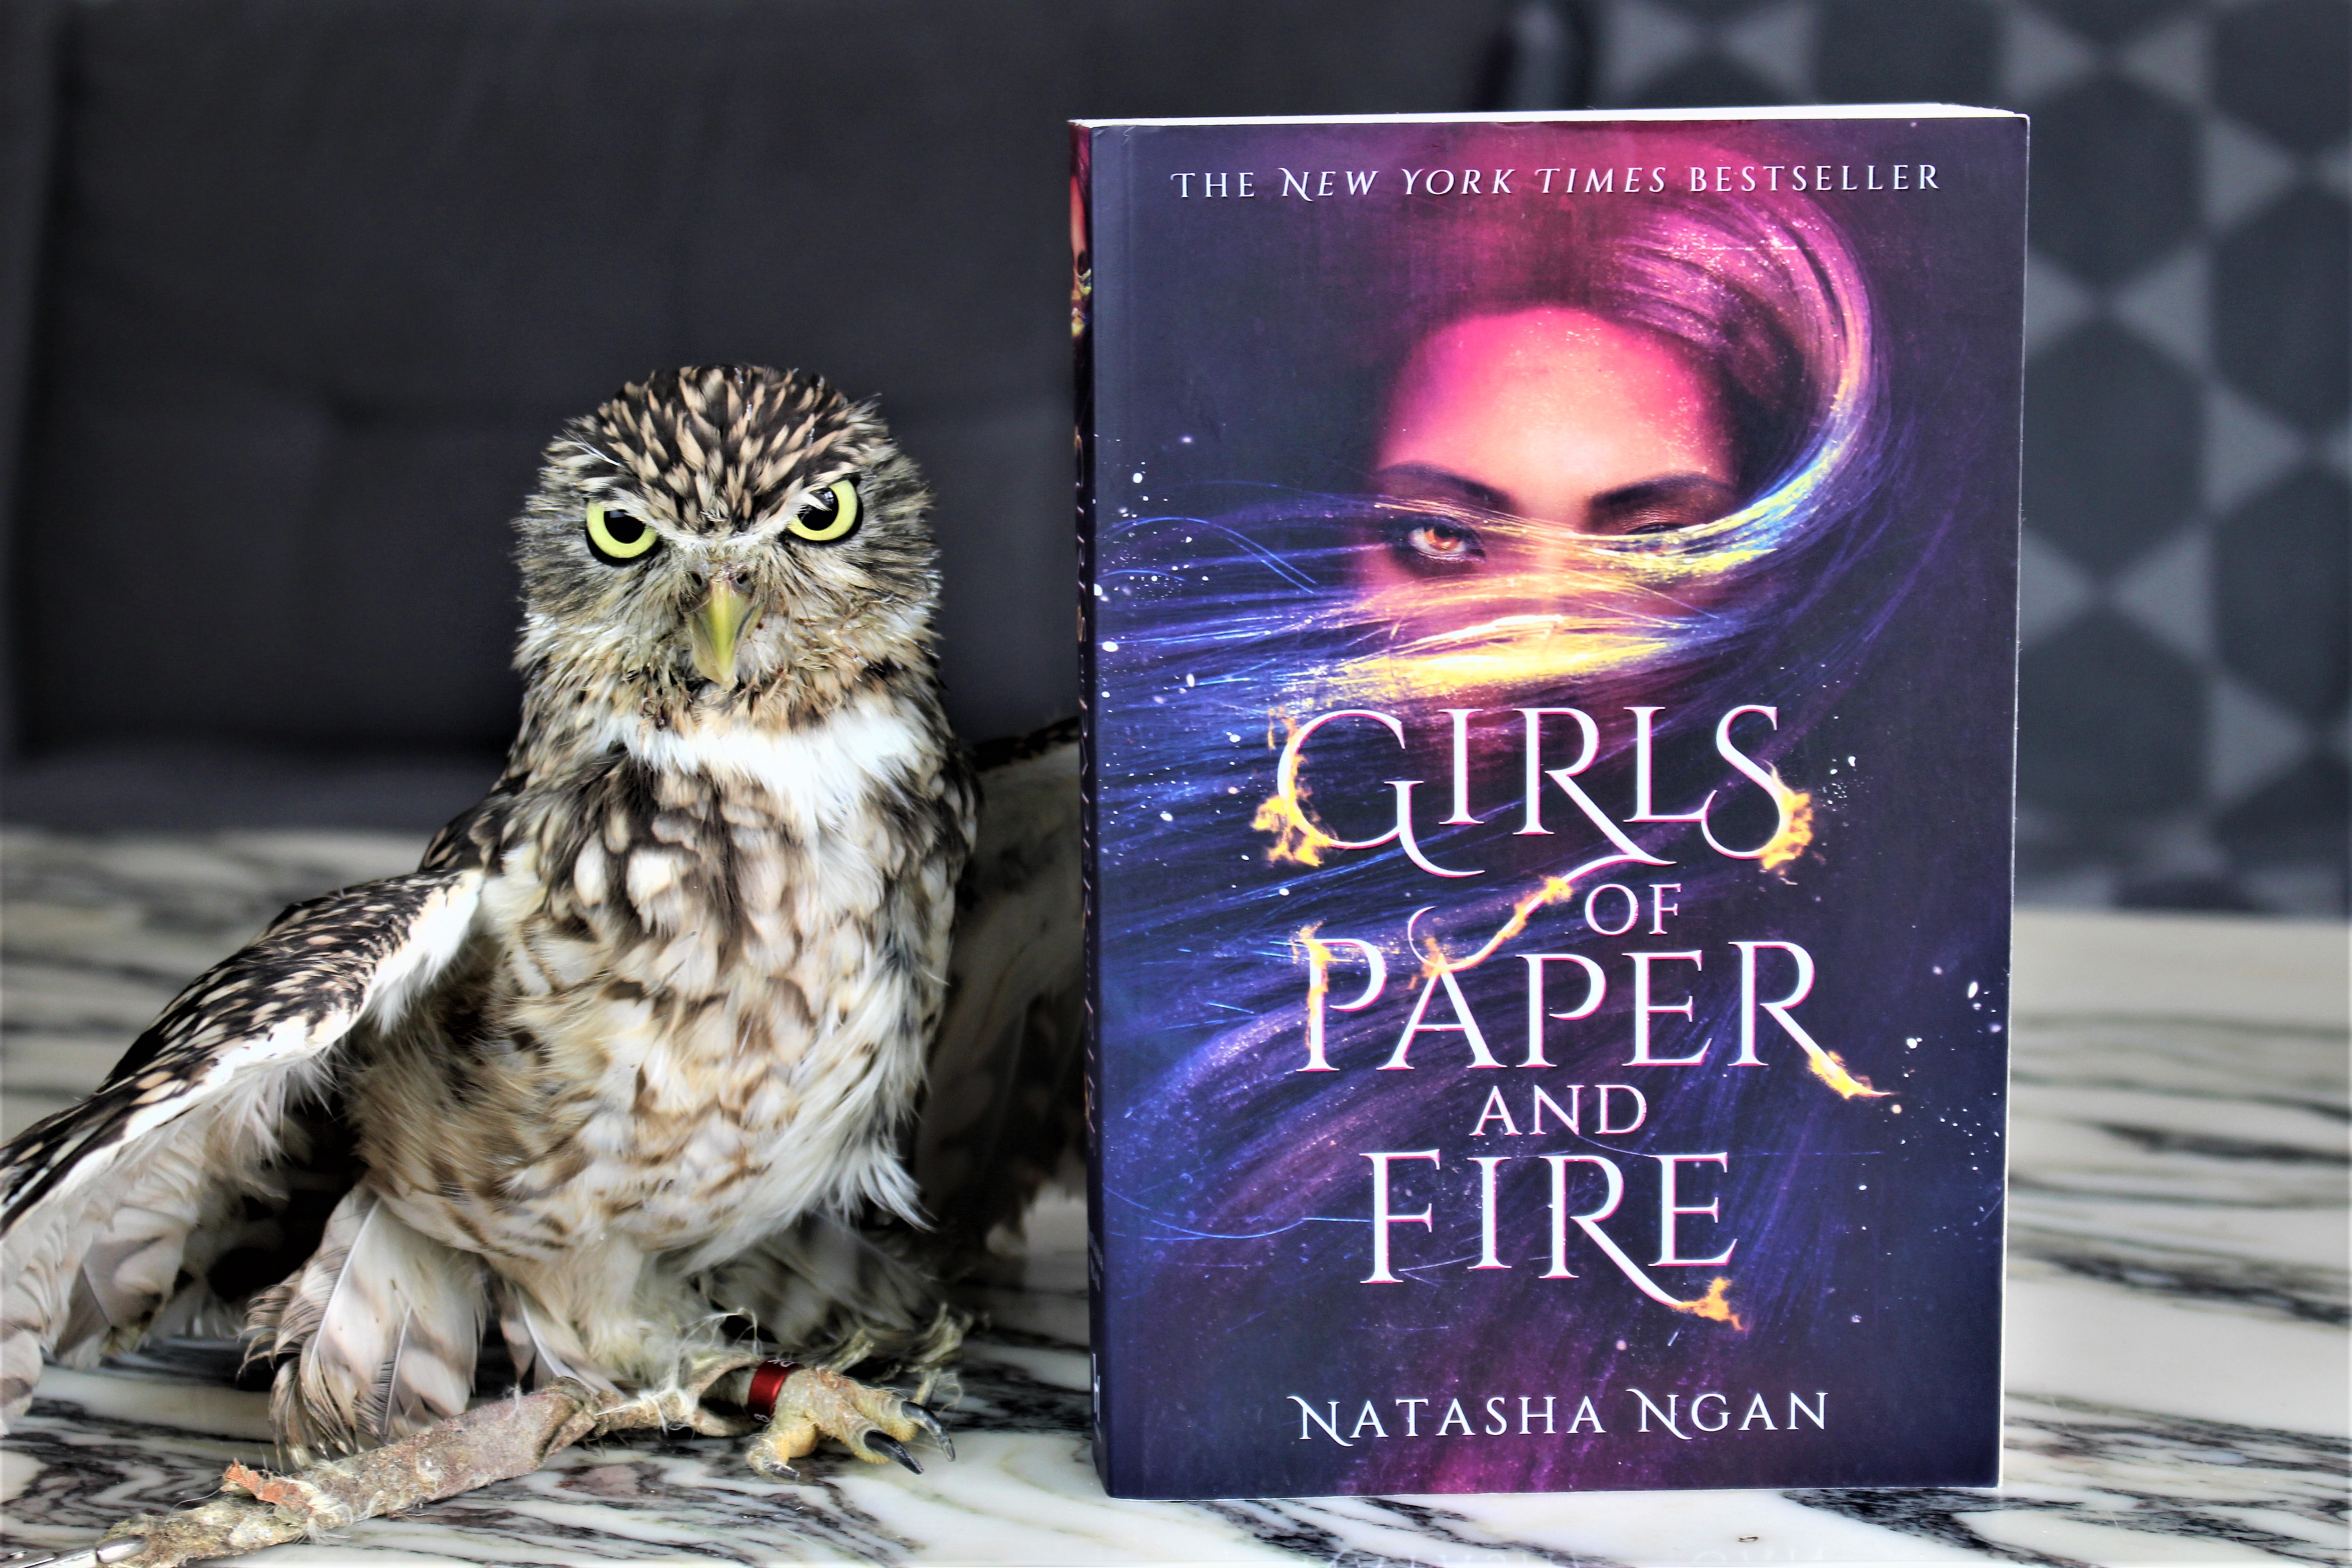 Girls of Paper and Fire Natasha Ngan